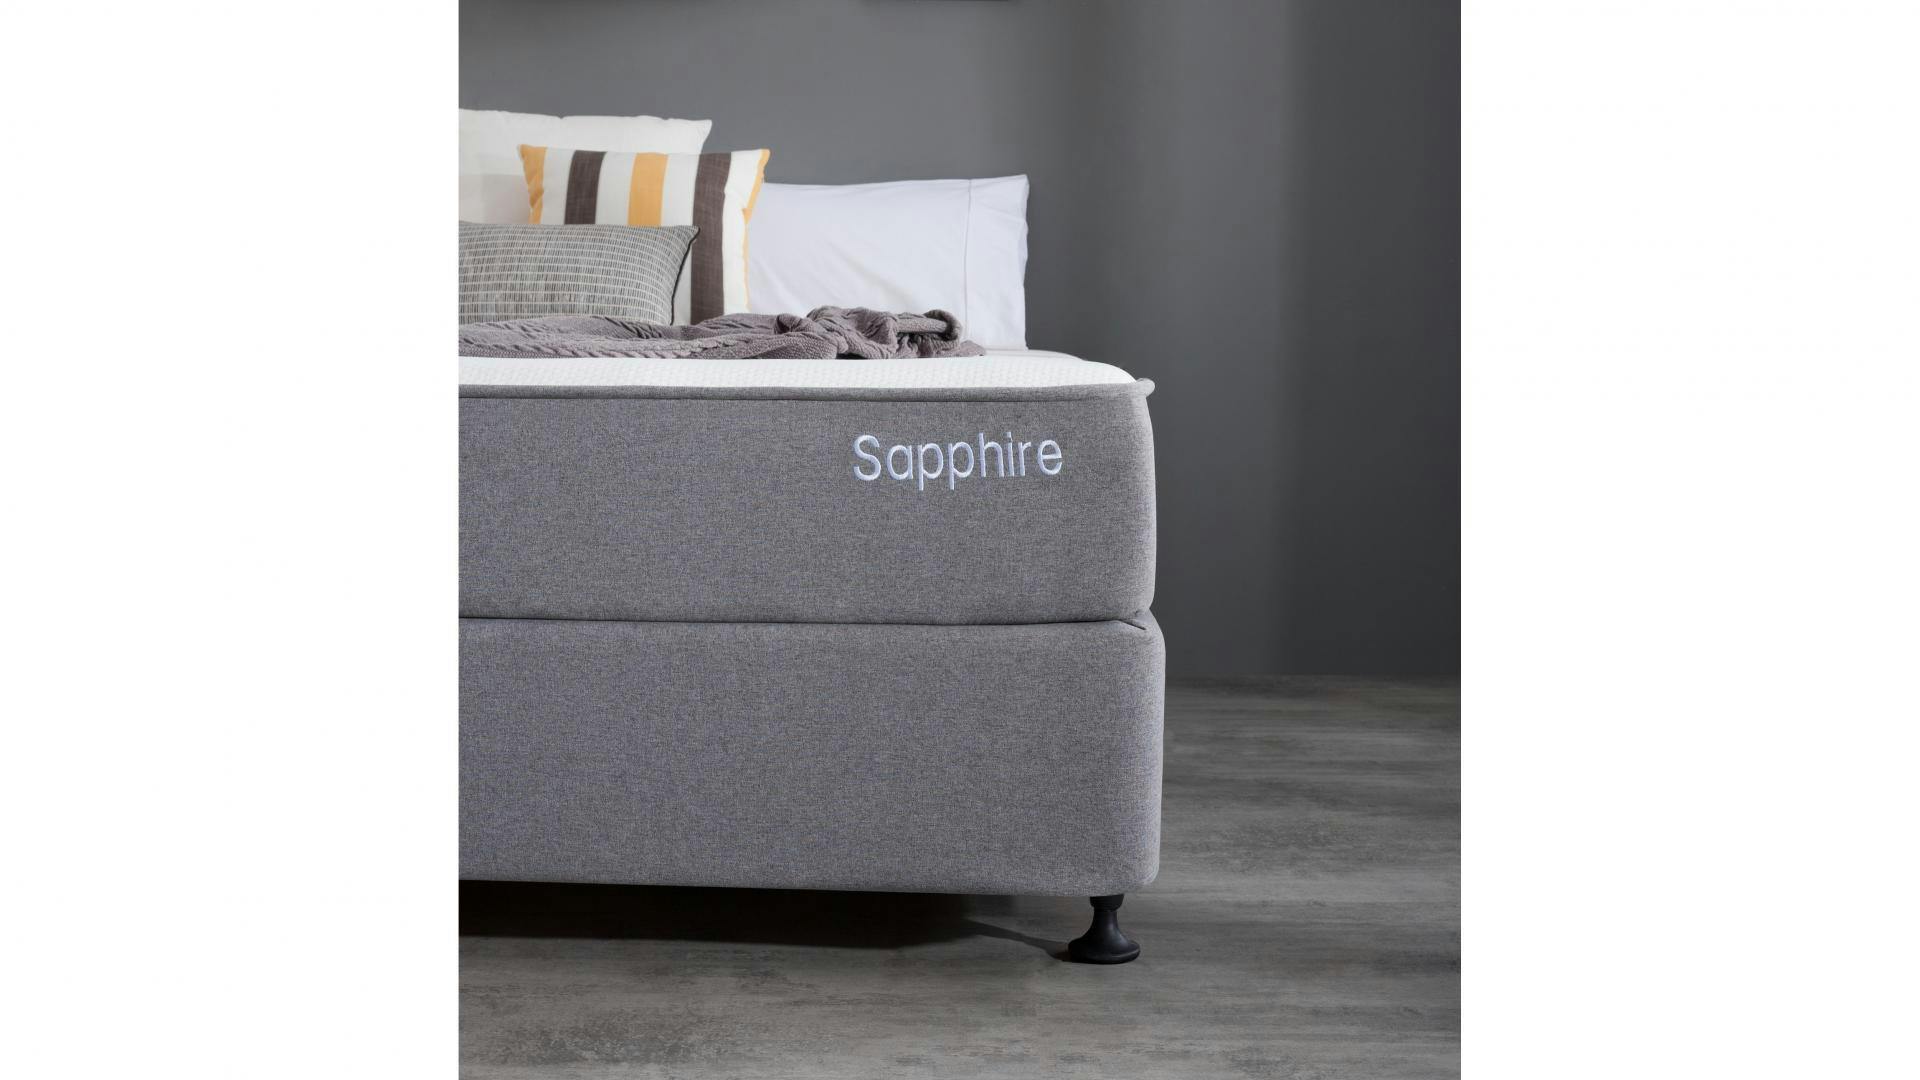 therapedic sapphire queen mattress